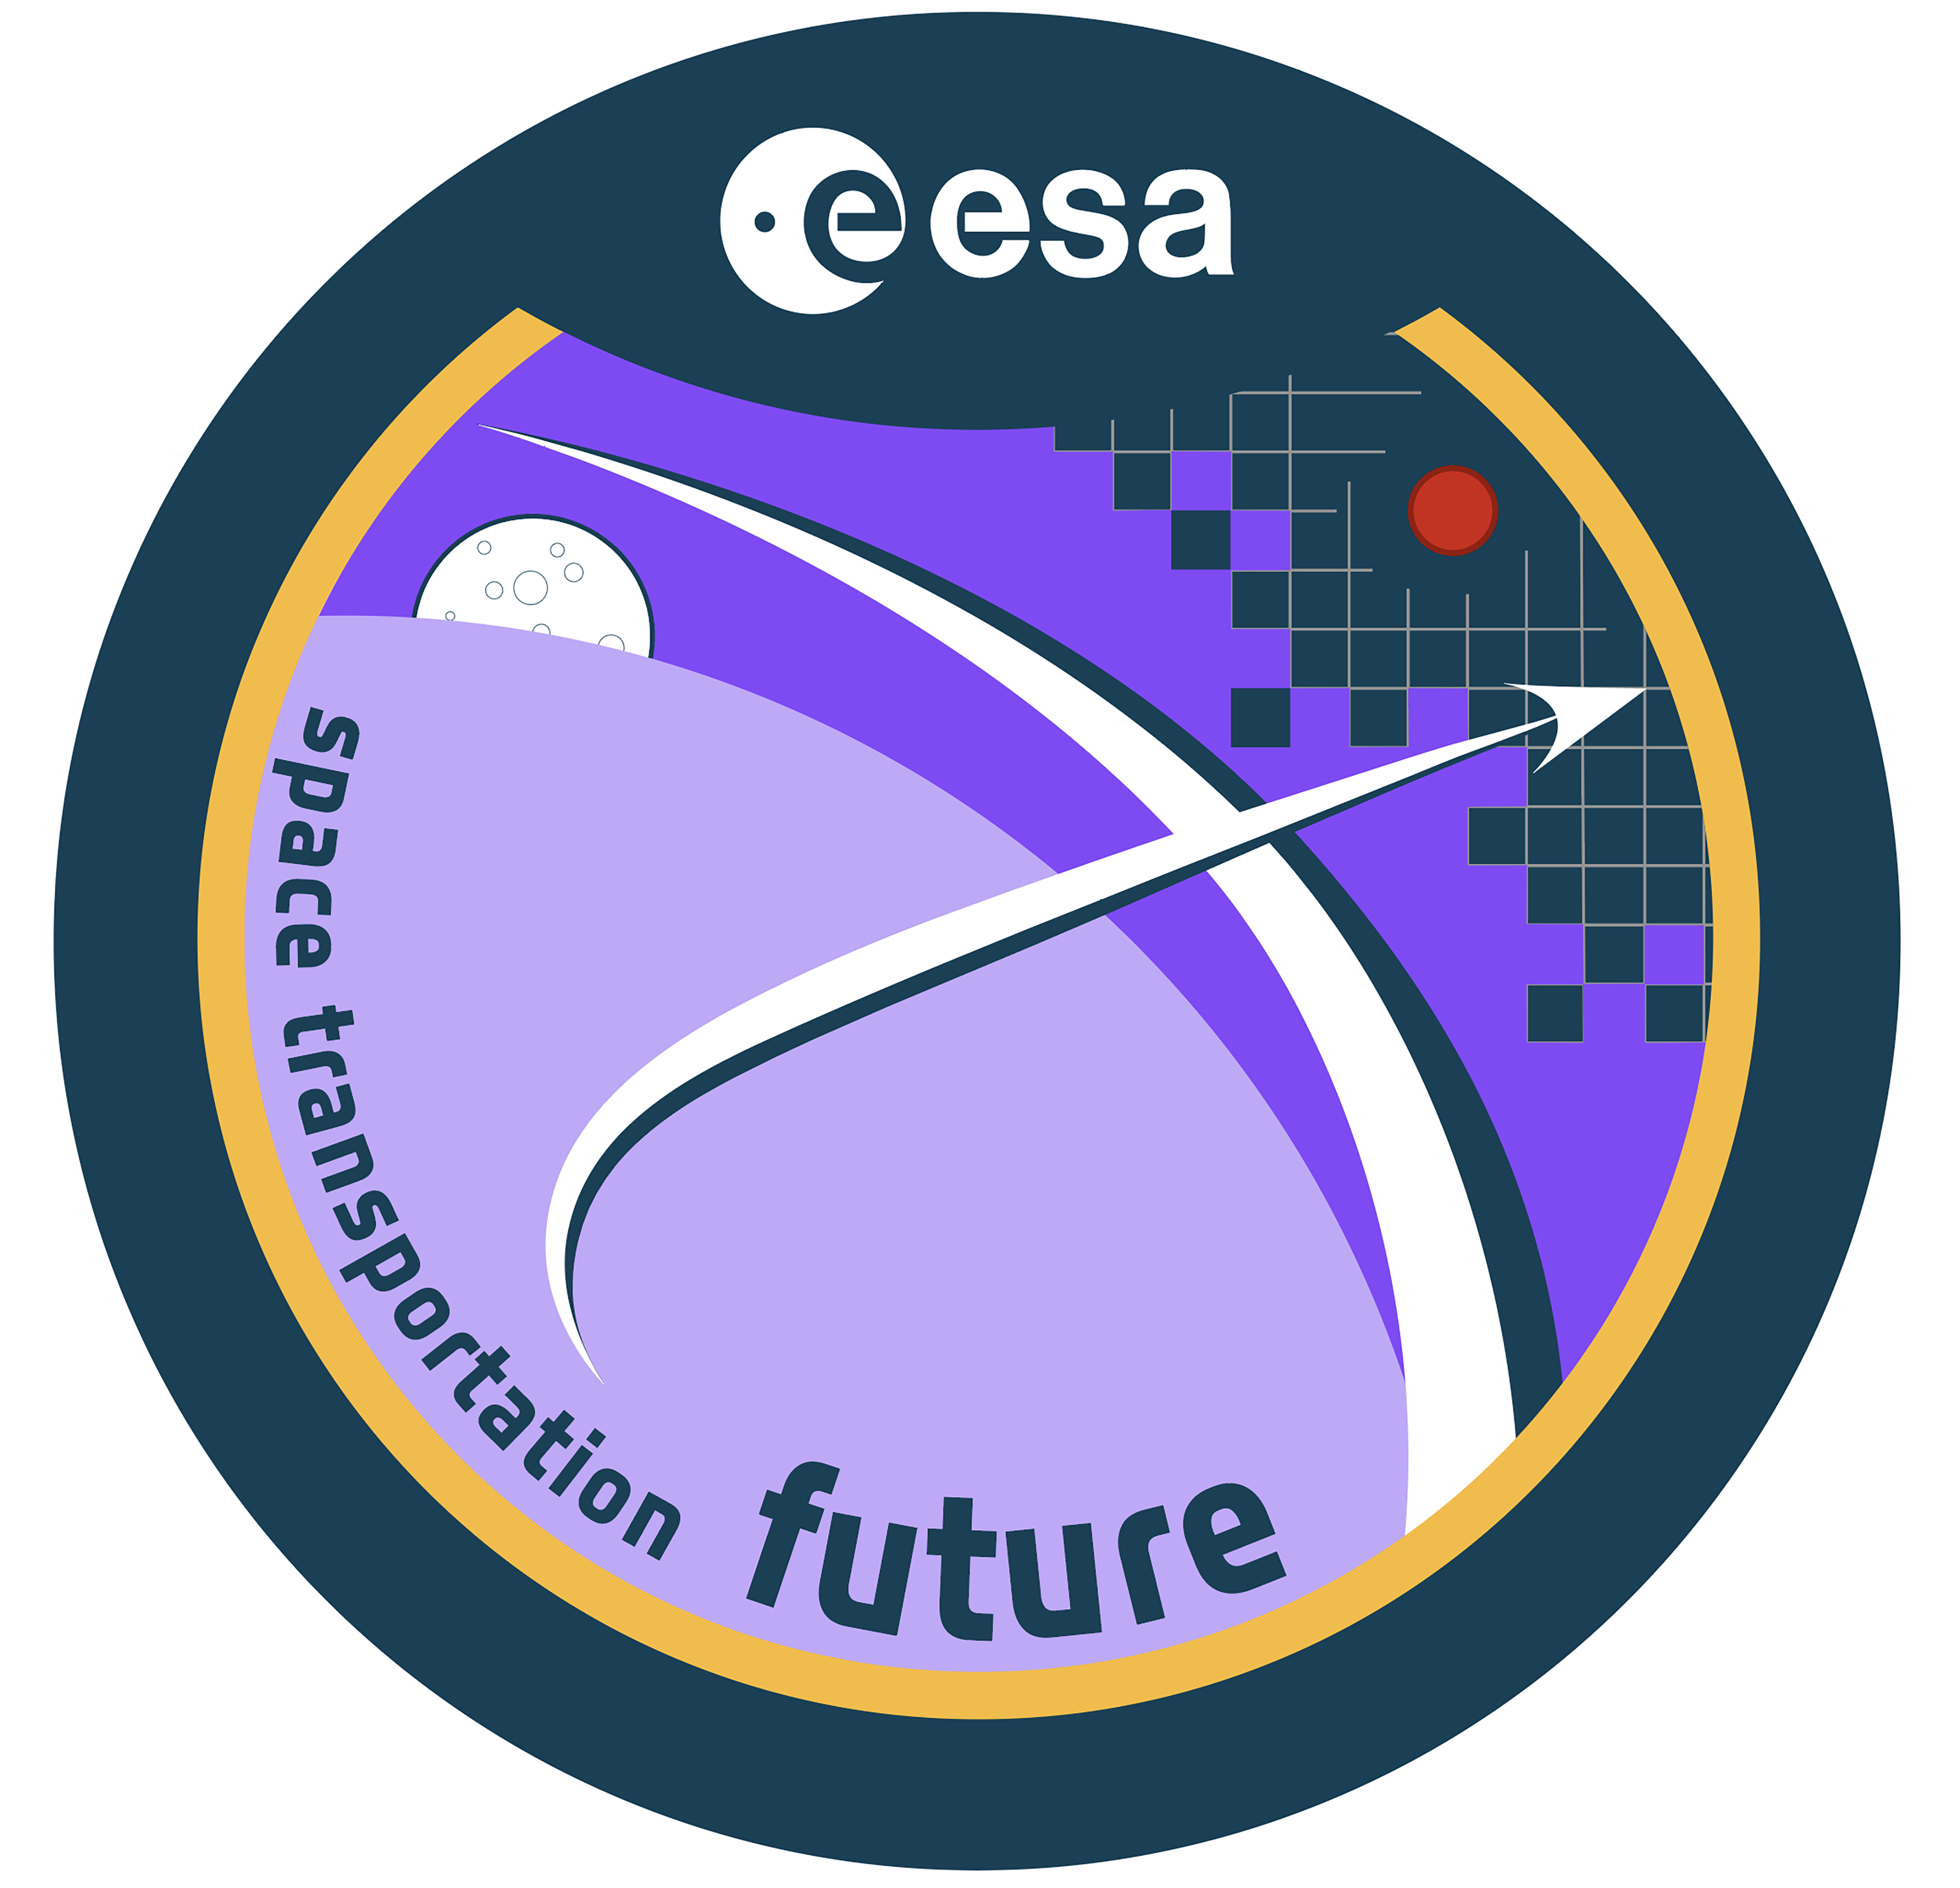 ESA - Space Transportation future logo